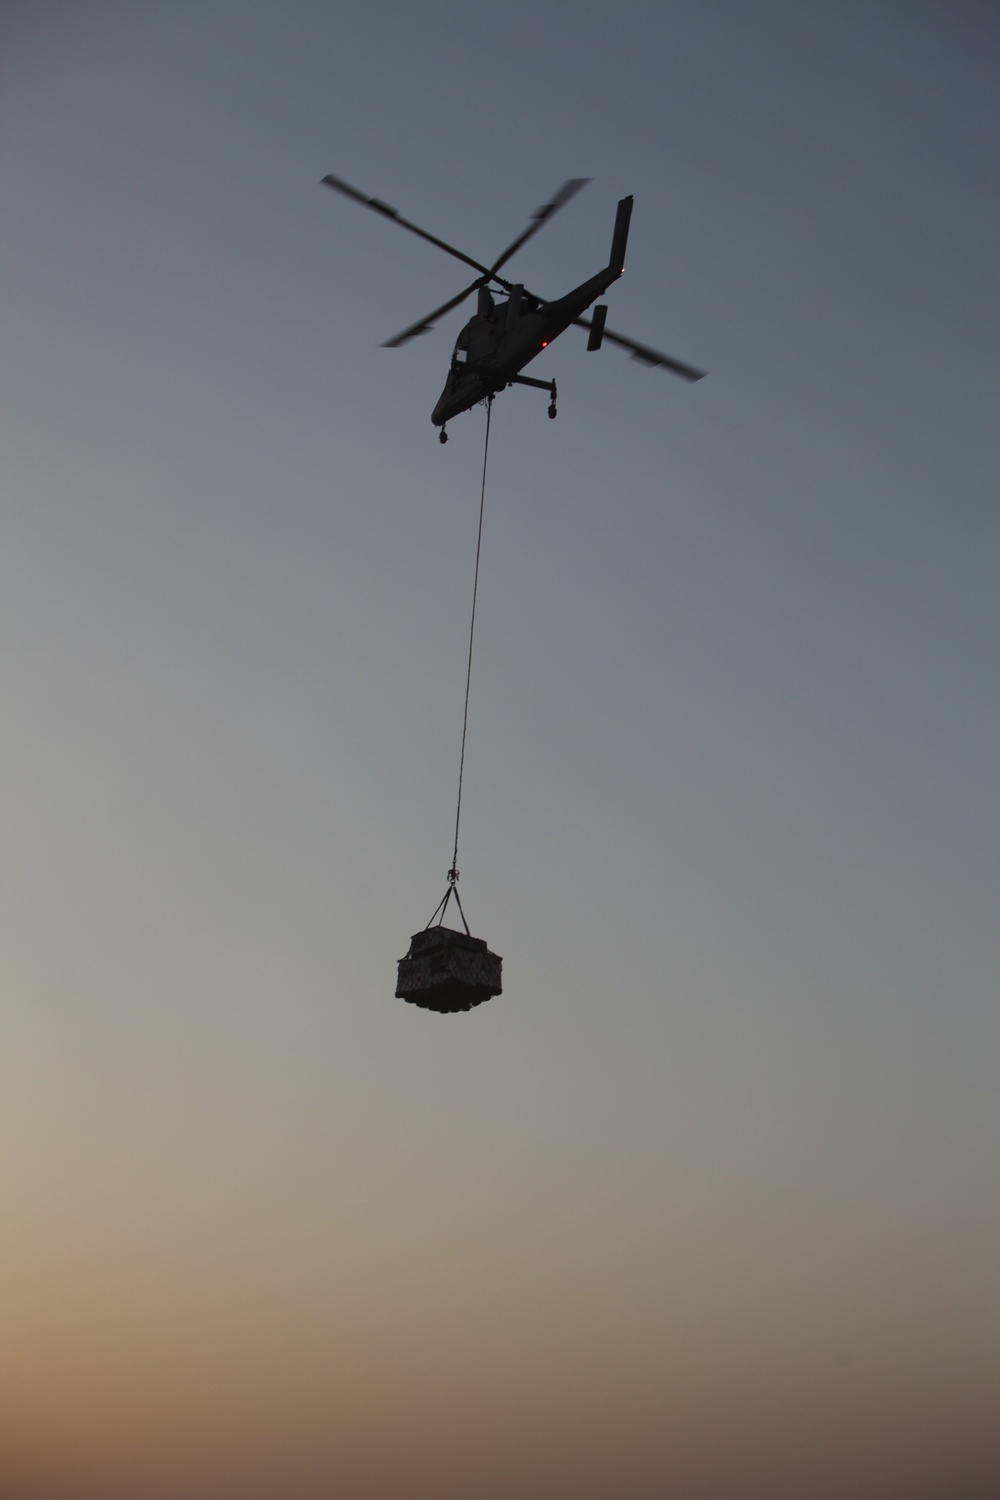 Drone offers revolutionary capability for logistics community